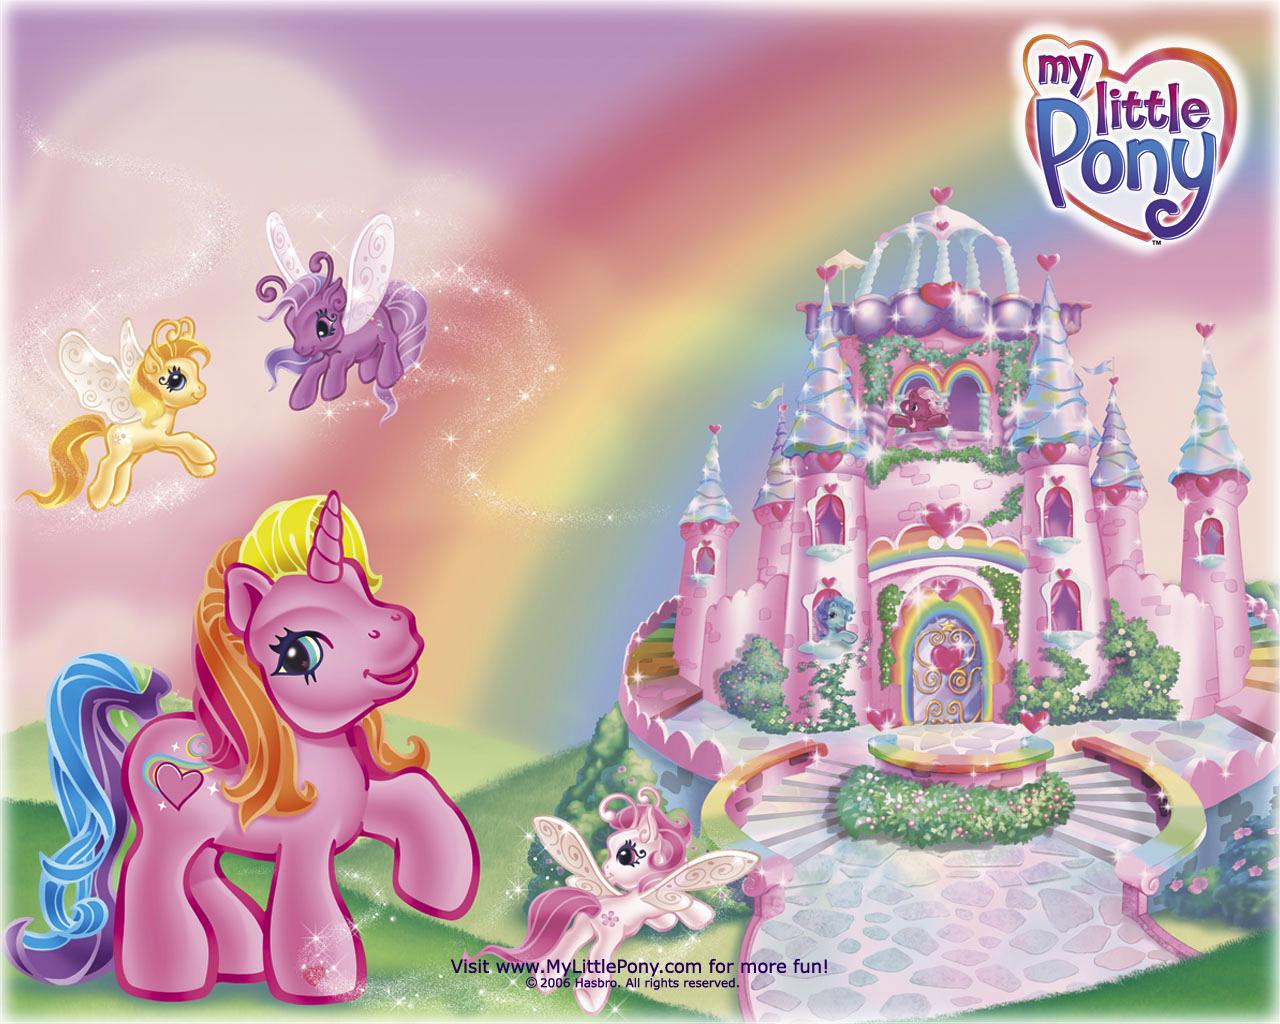 My-Little-Pony-my-little-pony-256751_1280_1024.jpg